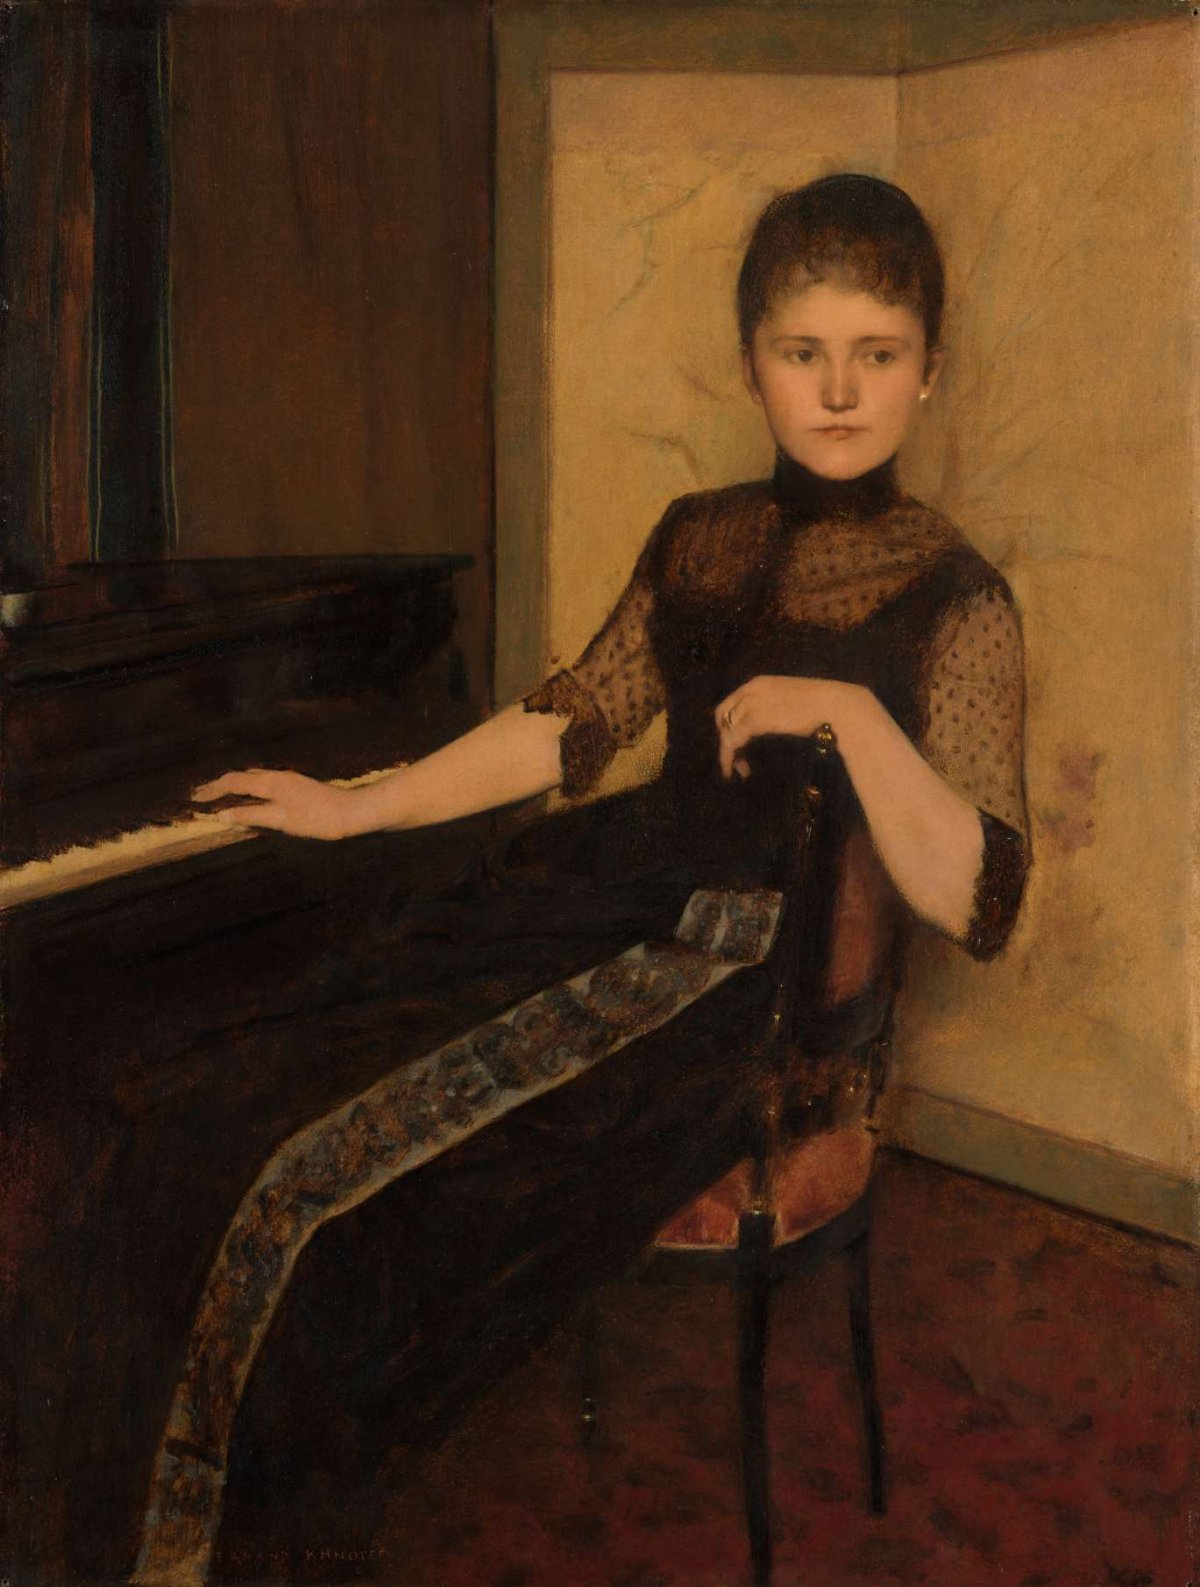 Portrait of Jonkvrouwe Maria Francisca Louisa Dommer van Poldersveldt, Fernand Khnopff, 1888